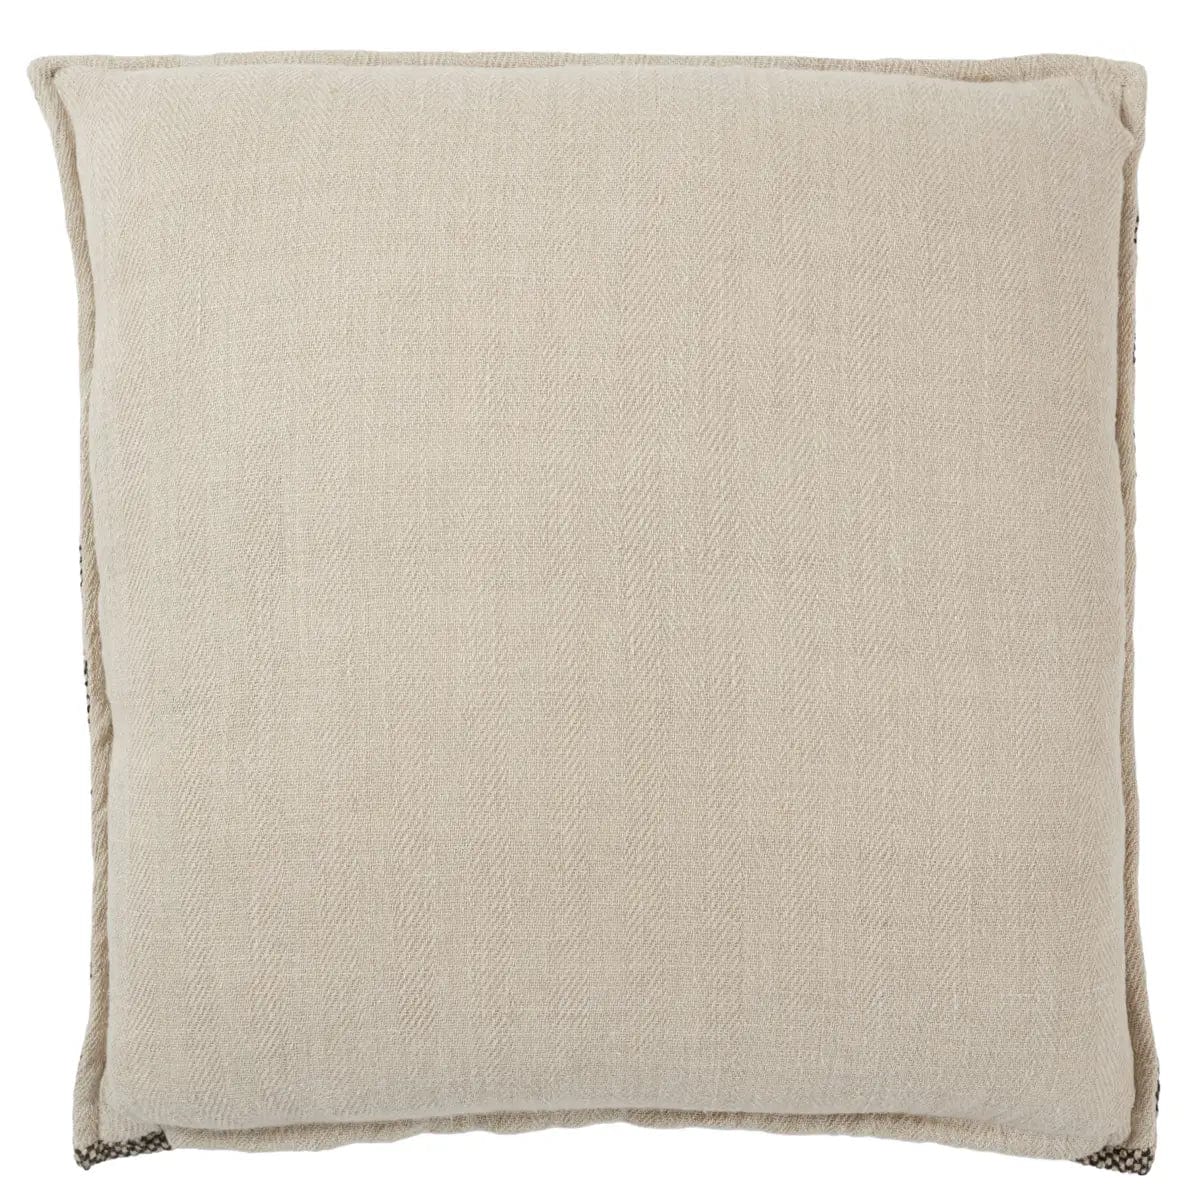 Jaipur Tanzy Brom Pillow Pillows